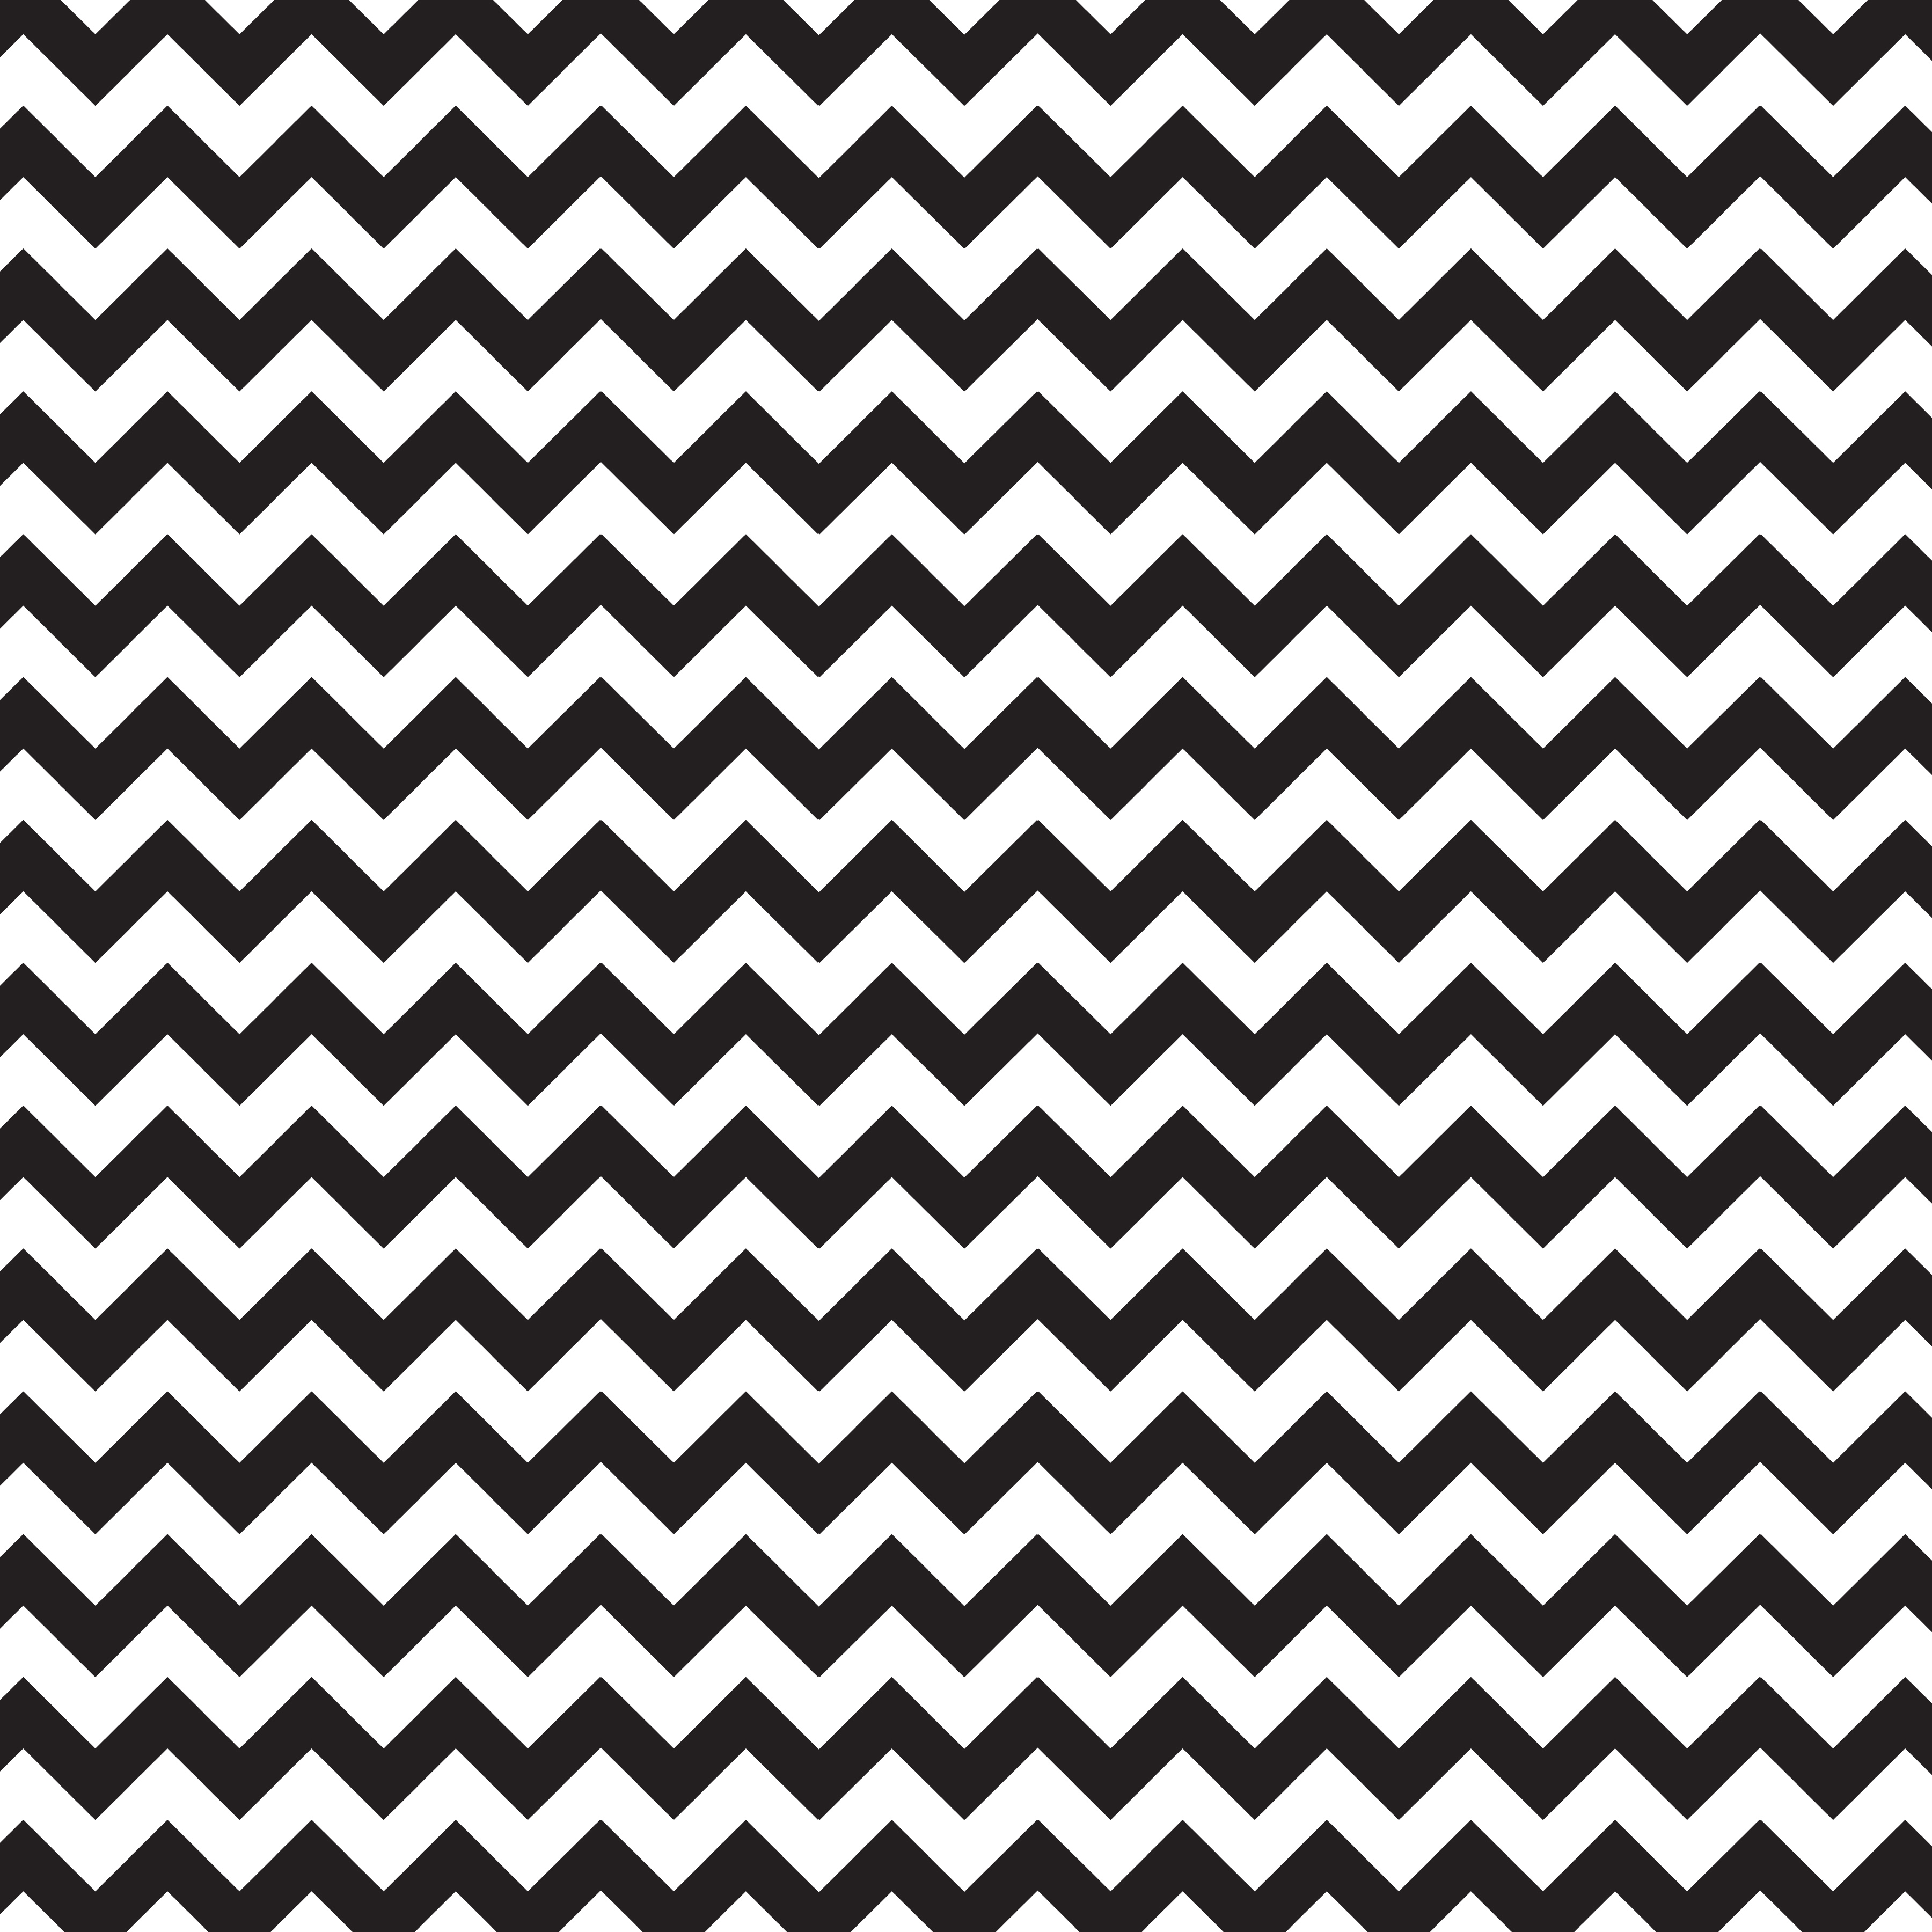 grey and white chevron wallpaper,pattern,line,design,pattern,monochrome